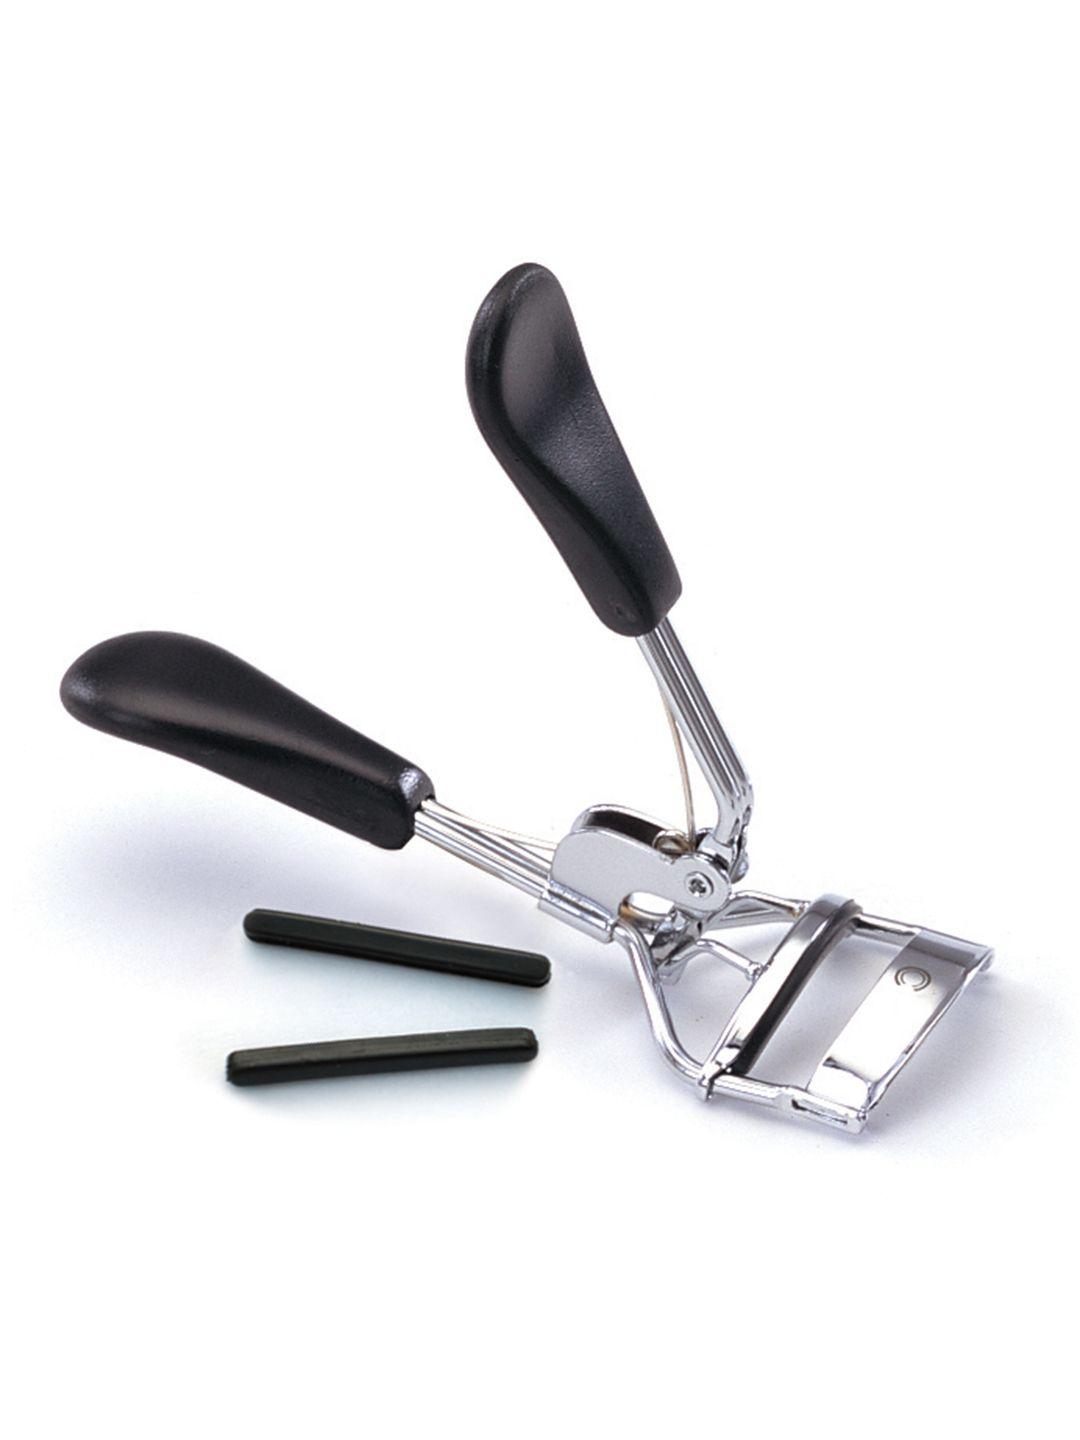 basicare-ergonomic-eyelash-curler-with-black-plastic-handles